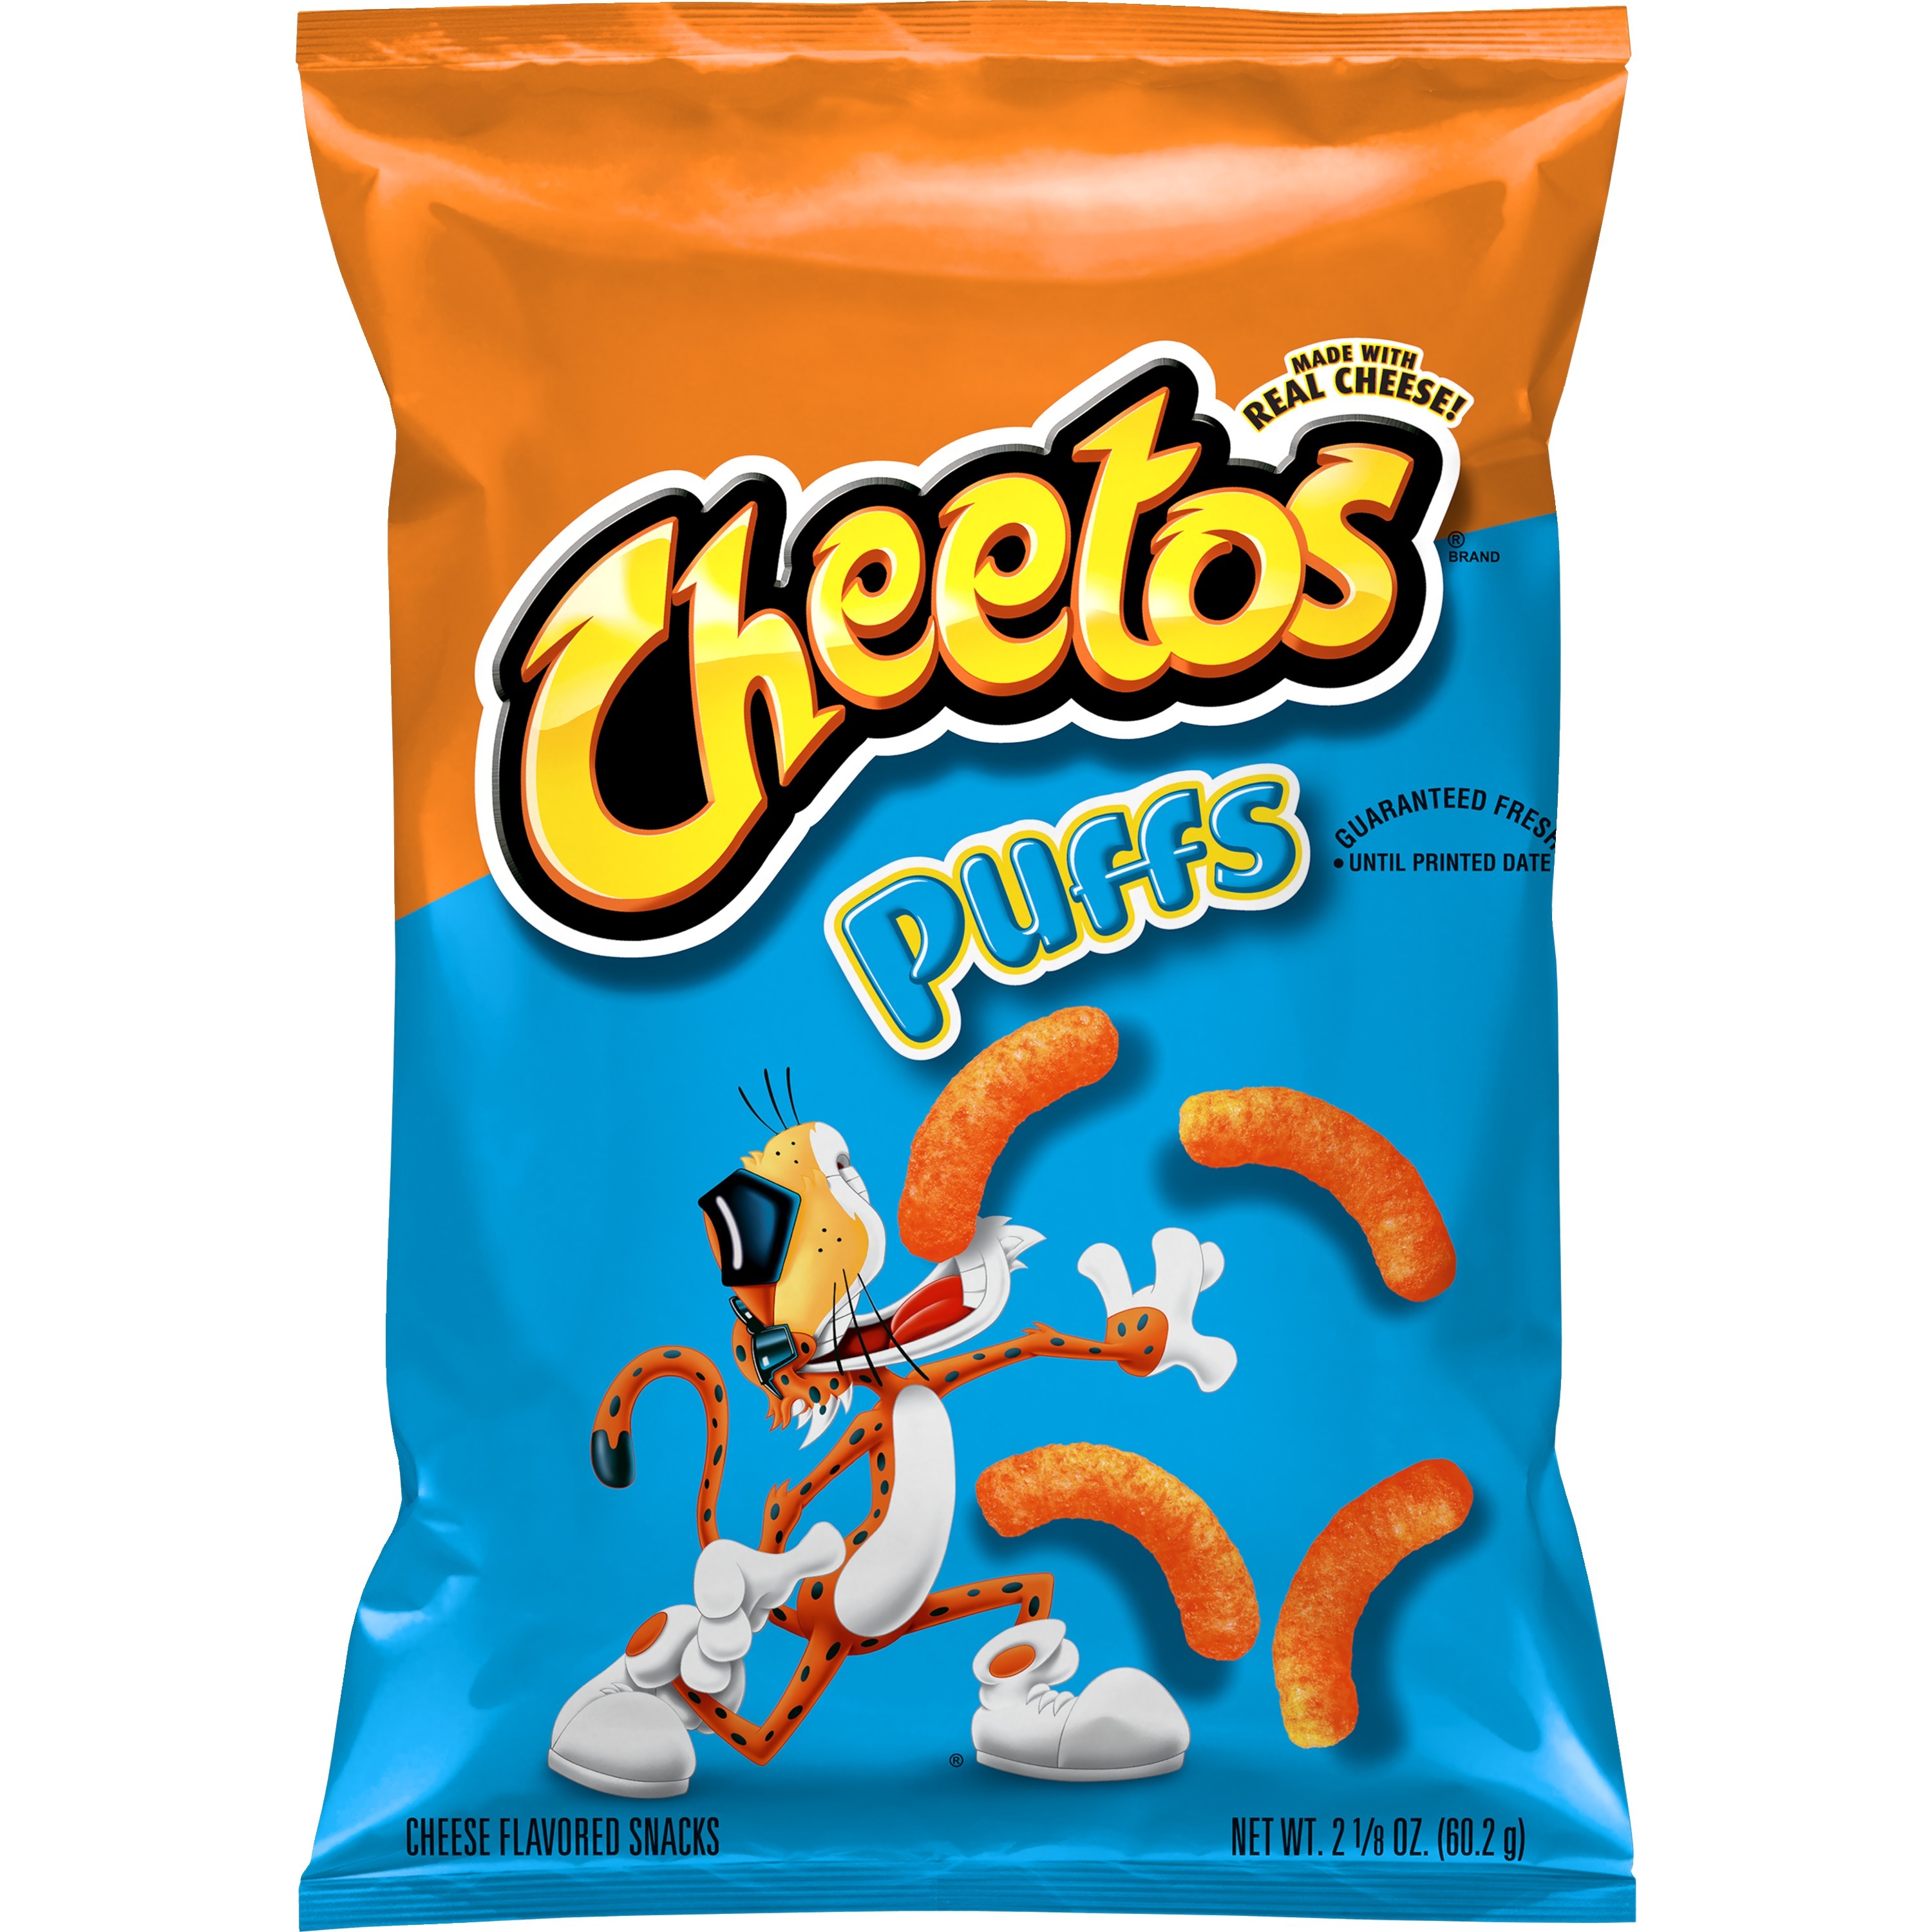 Cheetos Puffs 8oz